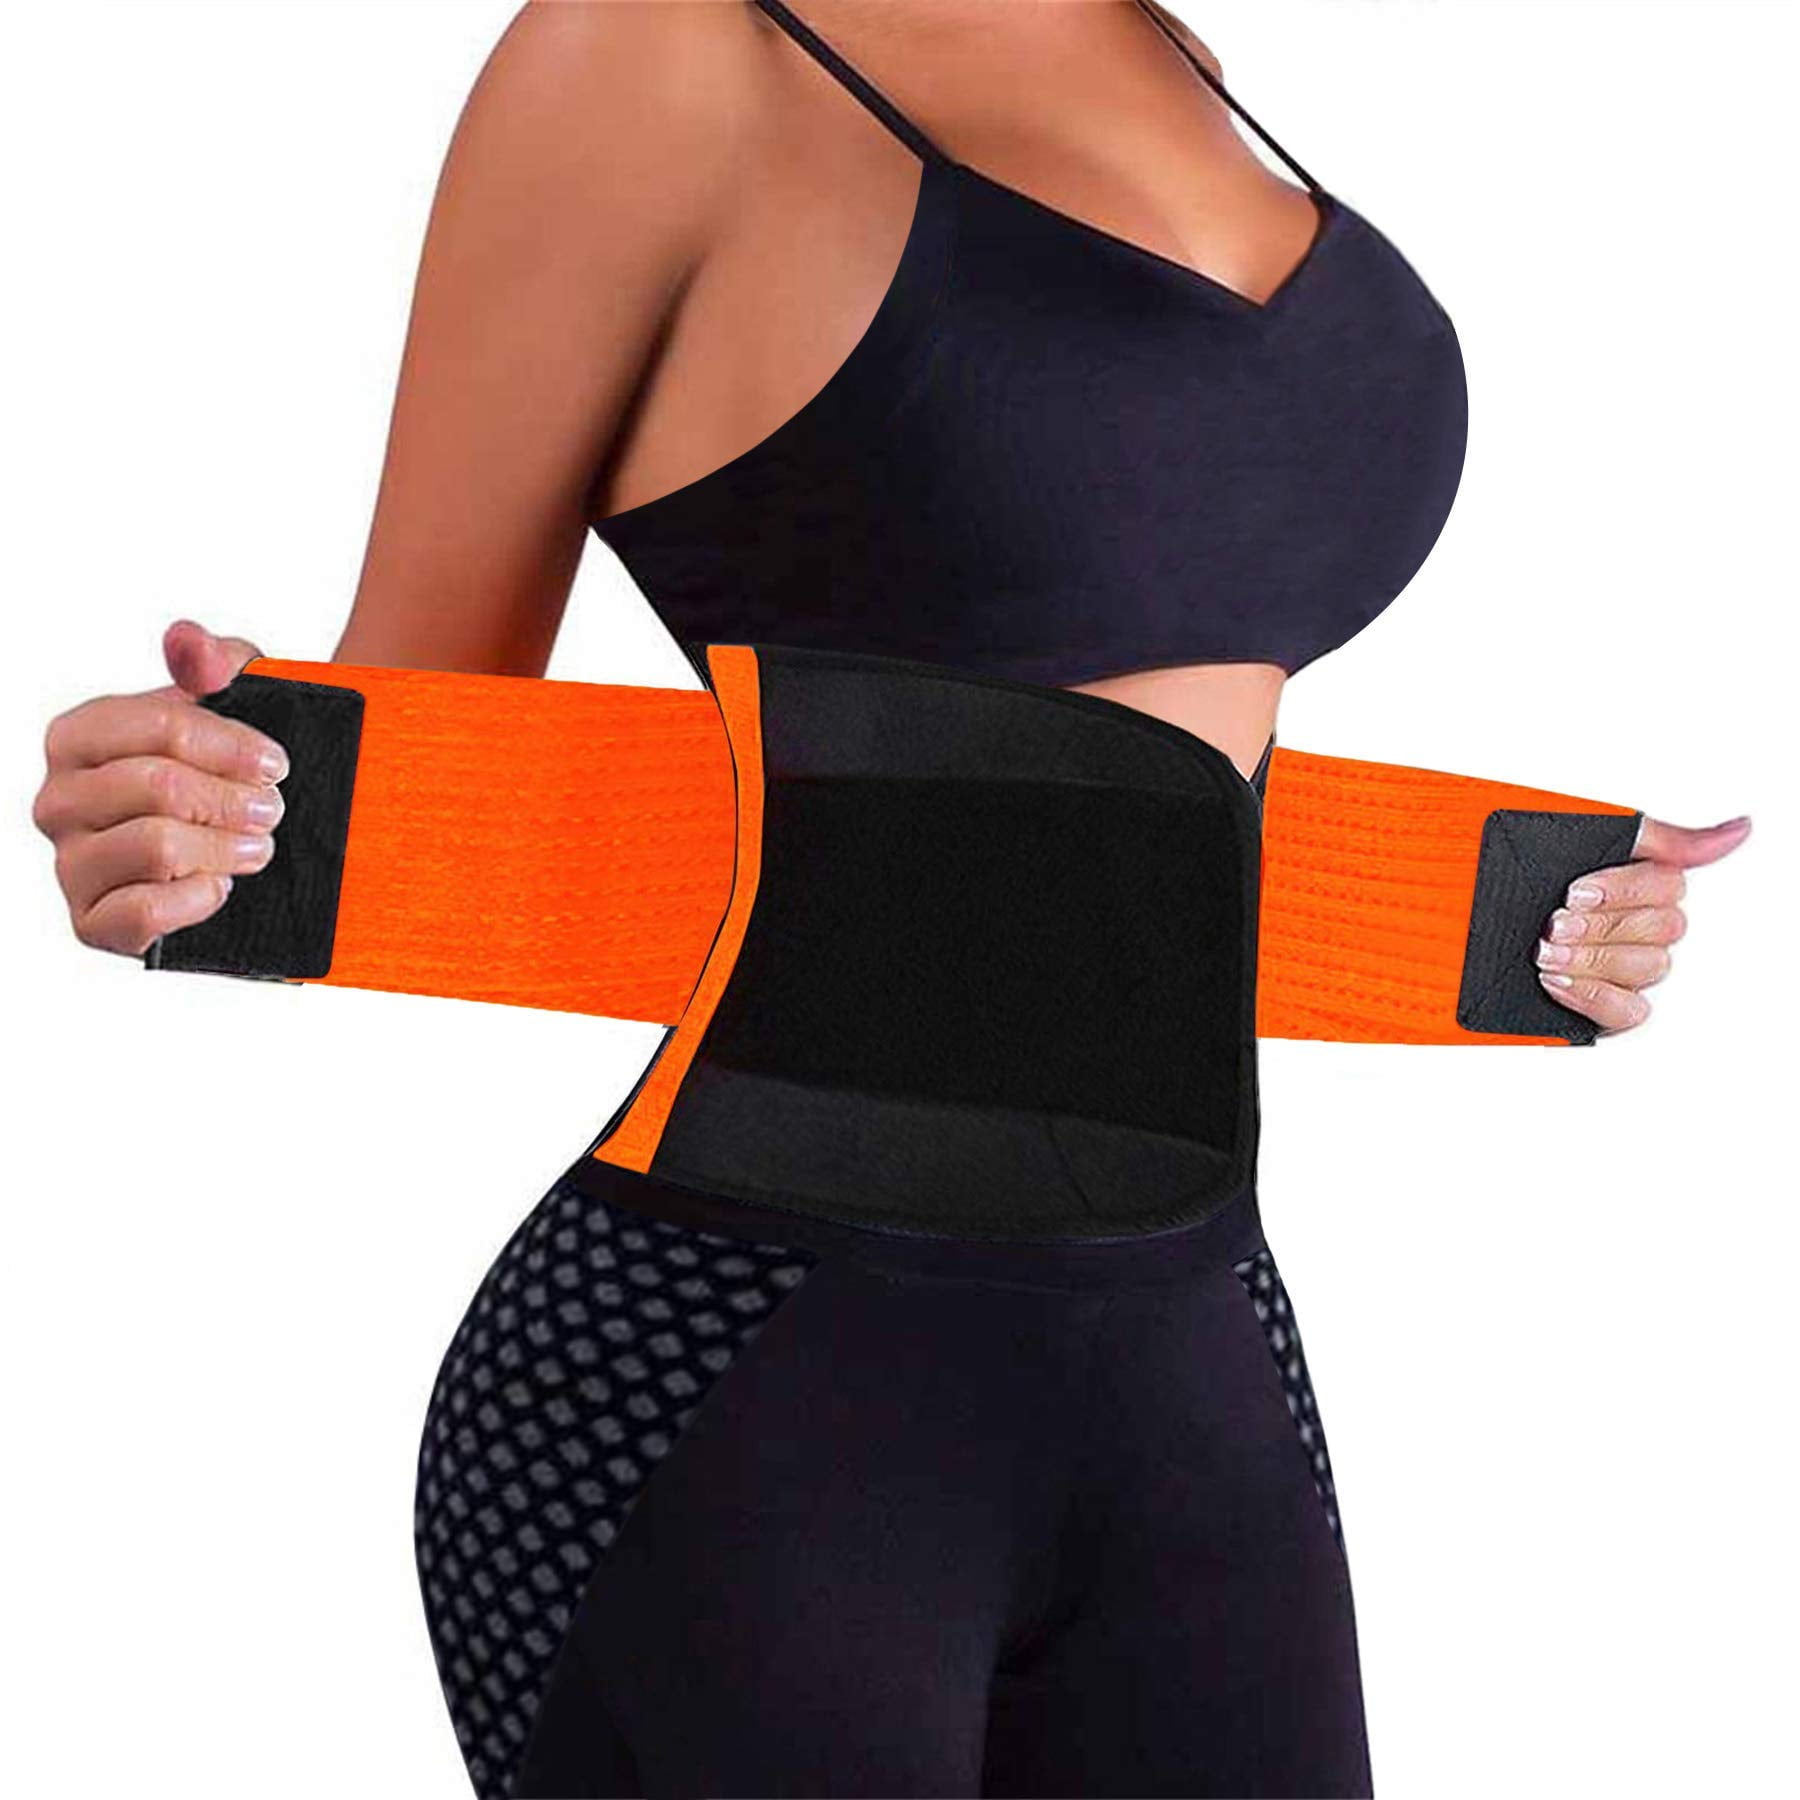 VITOMOR Waist Trainer For Women Lower Belly Fat Waist Cincher Trimmer Weight  Loss Slimming Body Shaper Belt For Workout Fitness 